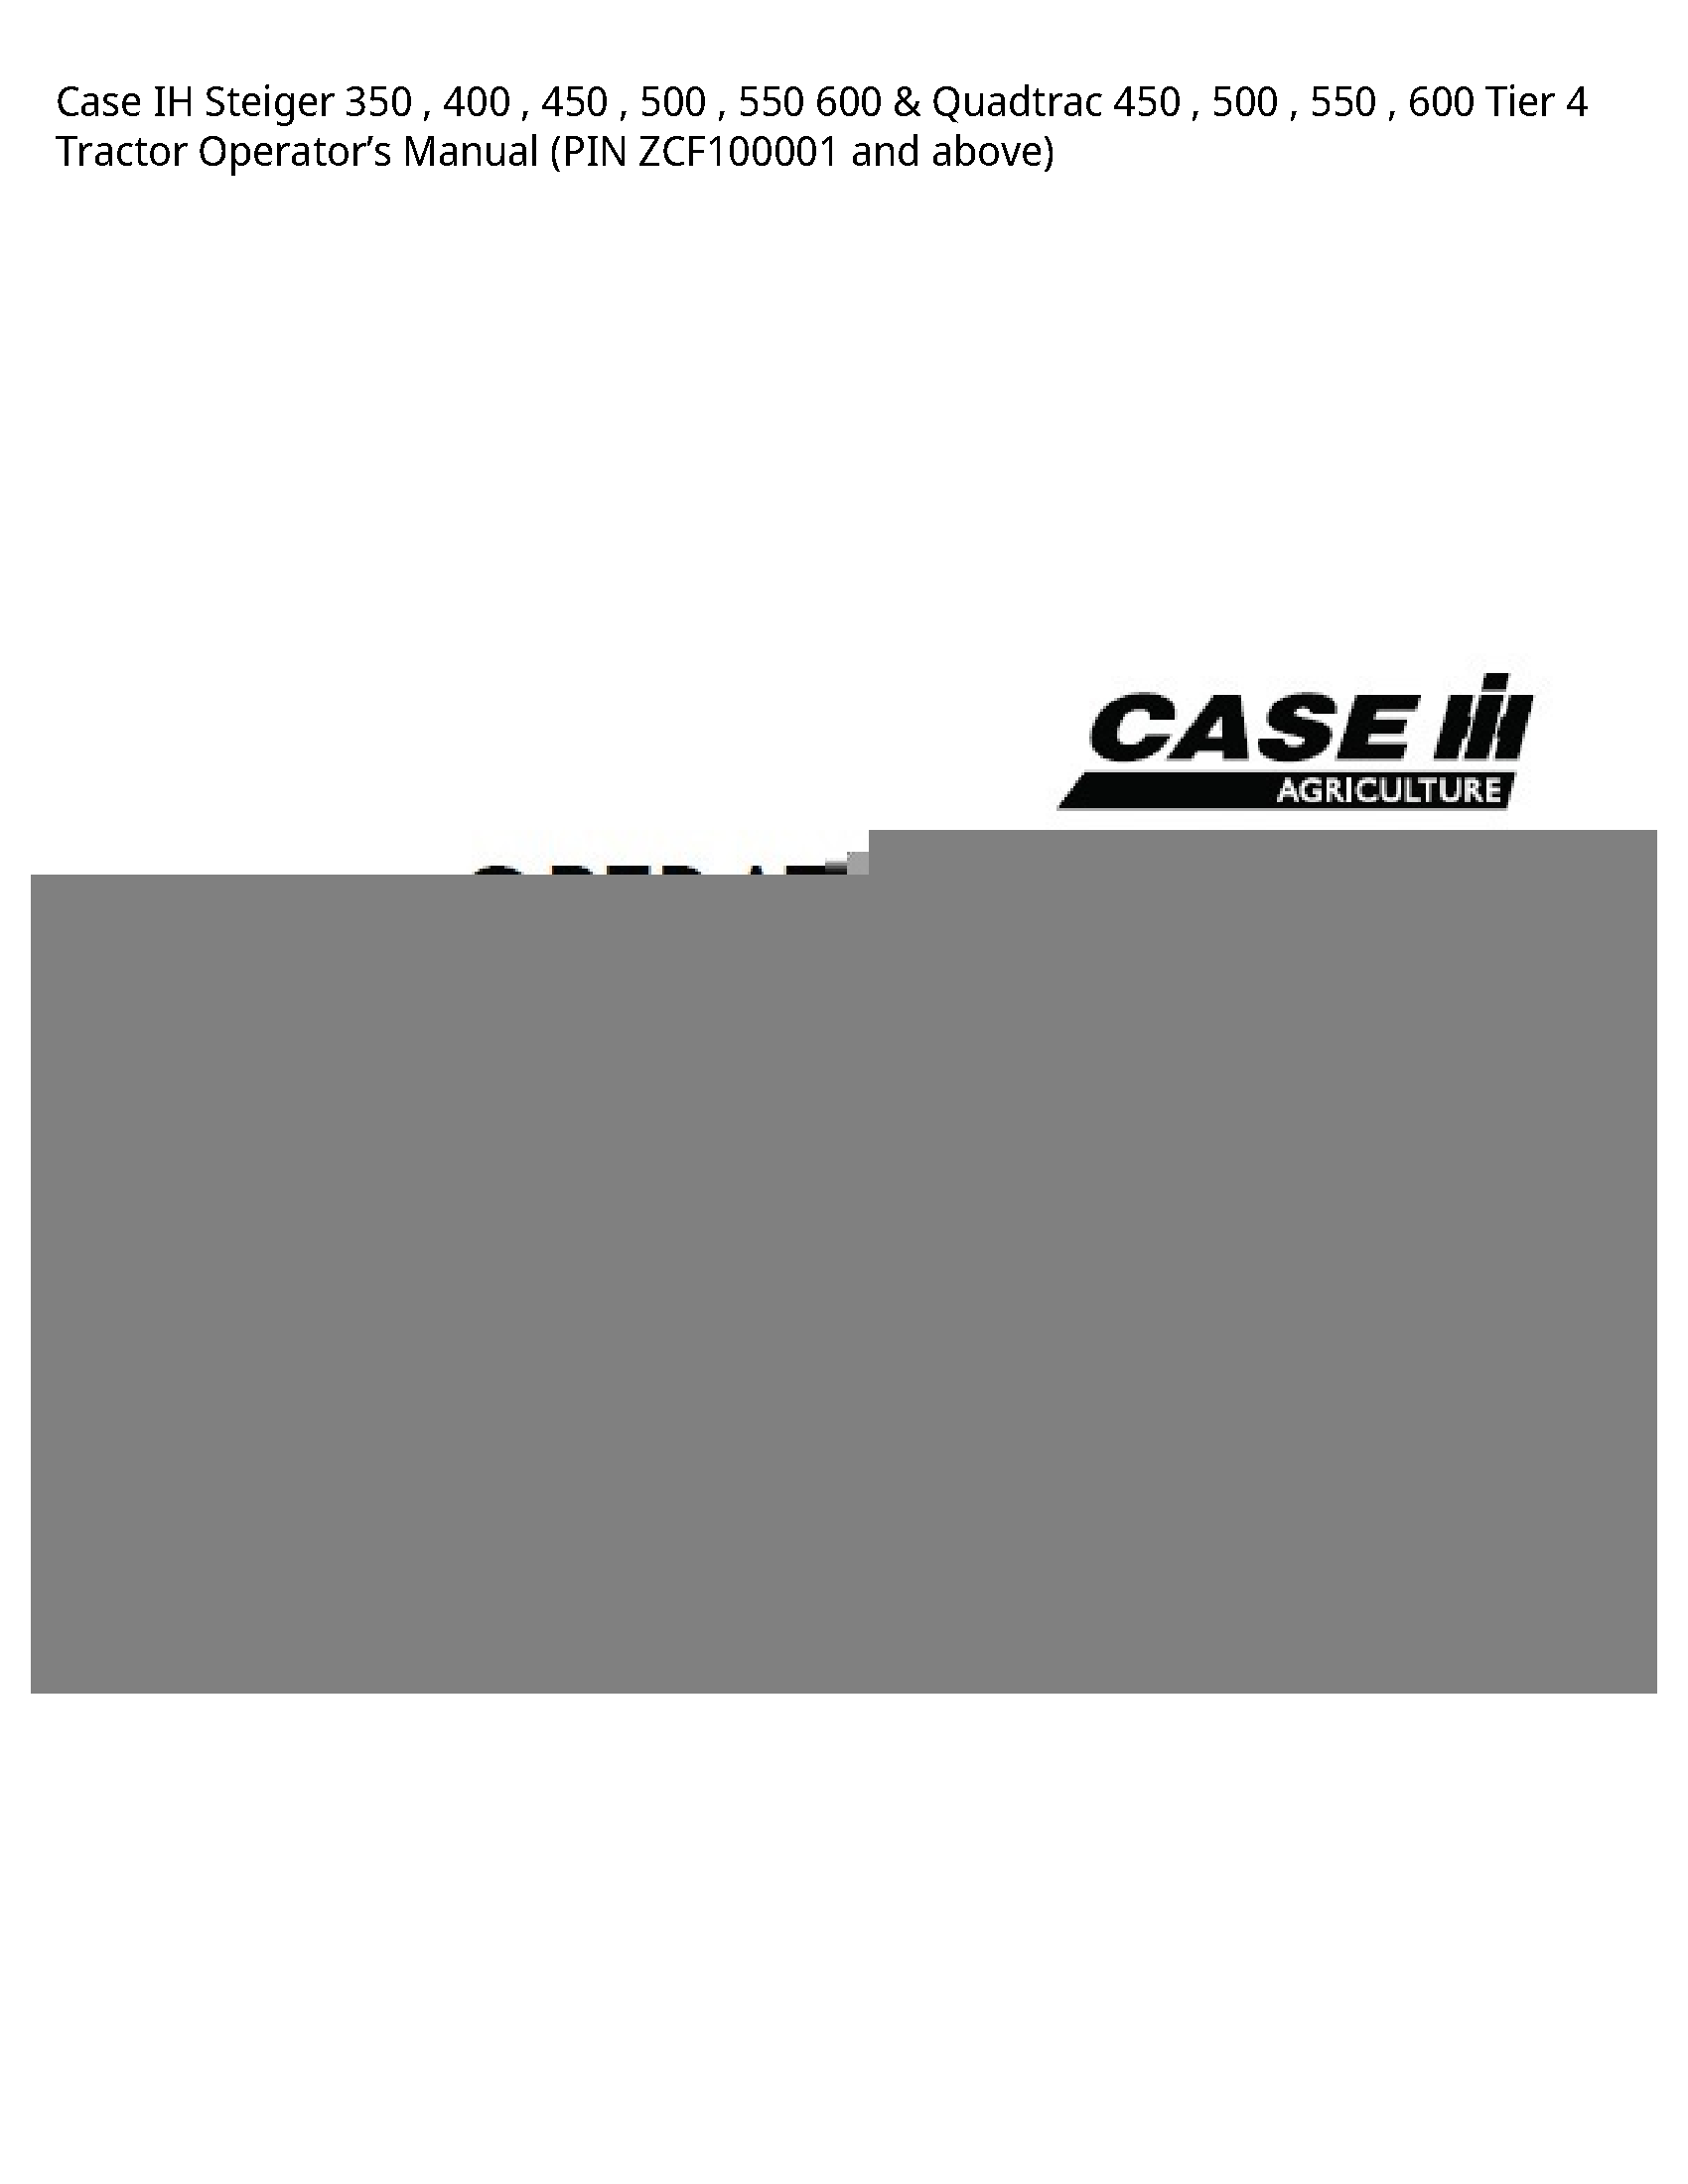 Case/Case IH 350 IH Steiger Quadtrac Tier Tractor Operator’s manual